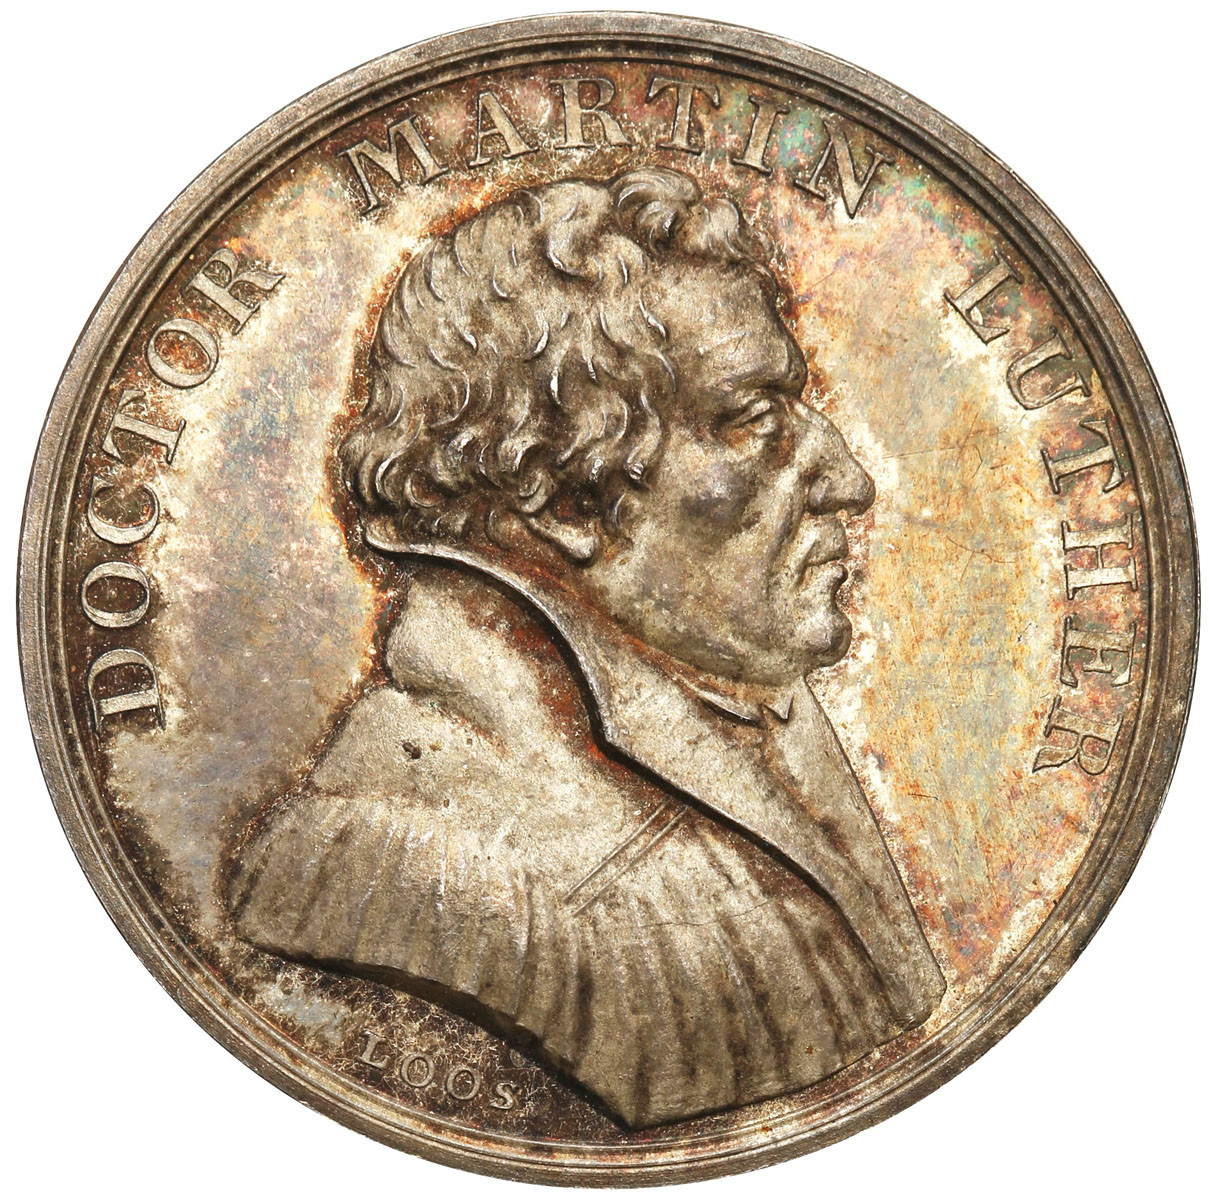 Niemcy, Martin Luther. Medal 1817, srebro